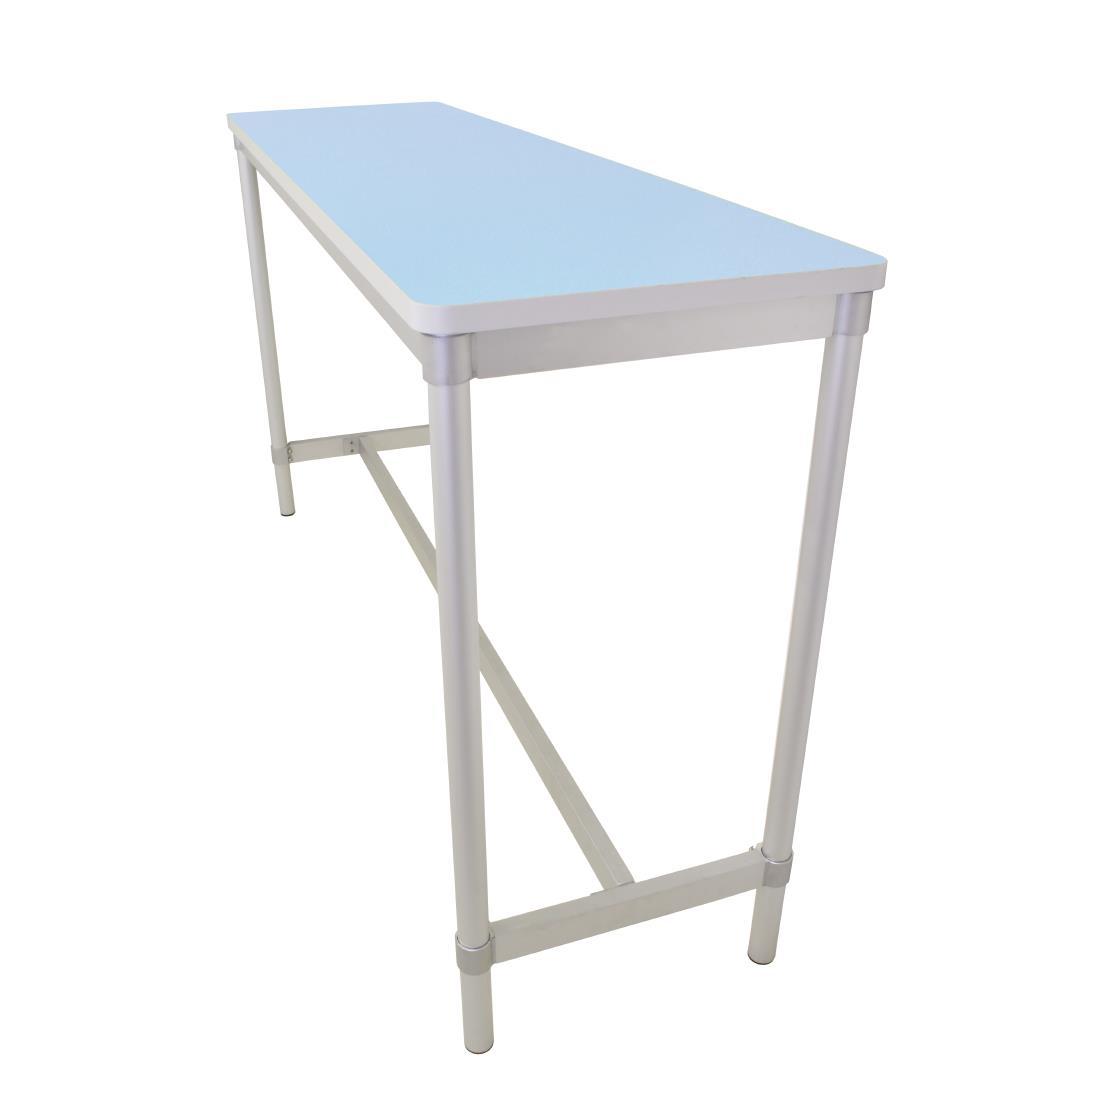 Gopak Enviro Indoor Pastel Blue Rectangle Poseur Table 1200mm - DG131-PB  - 2